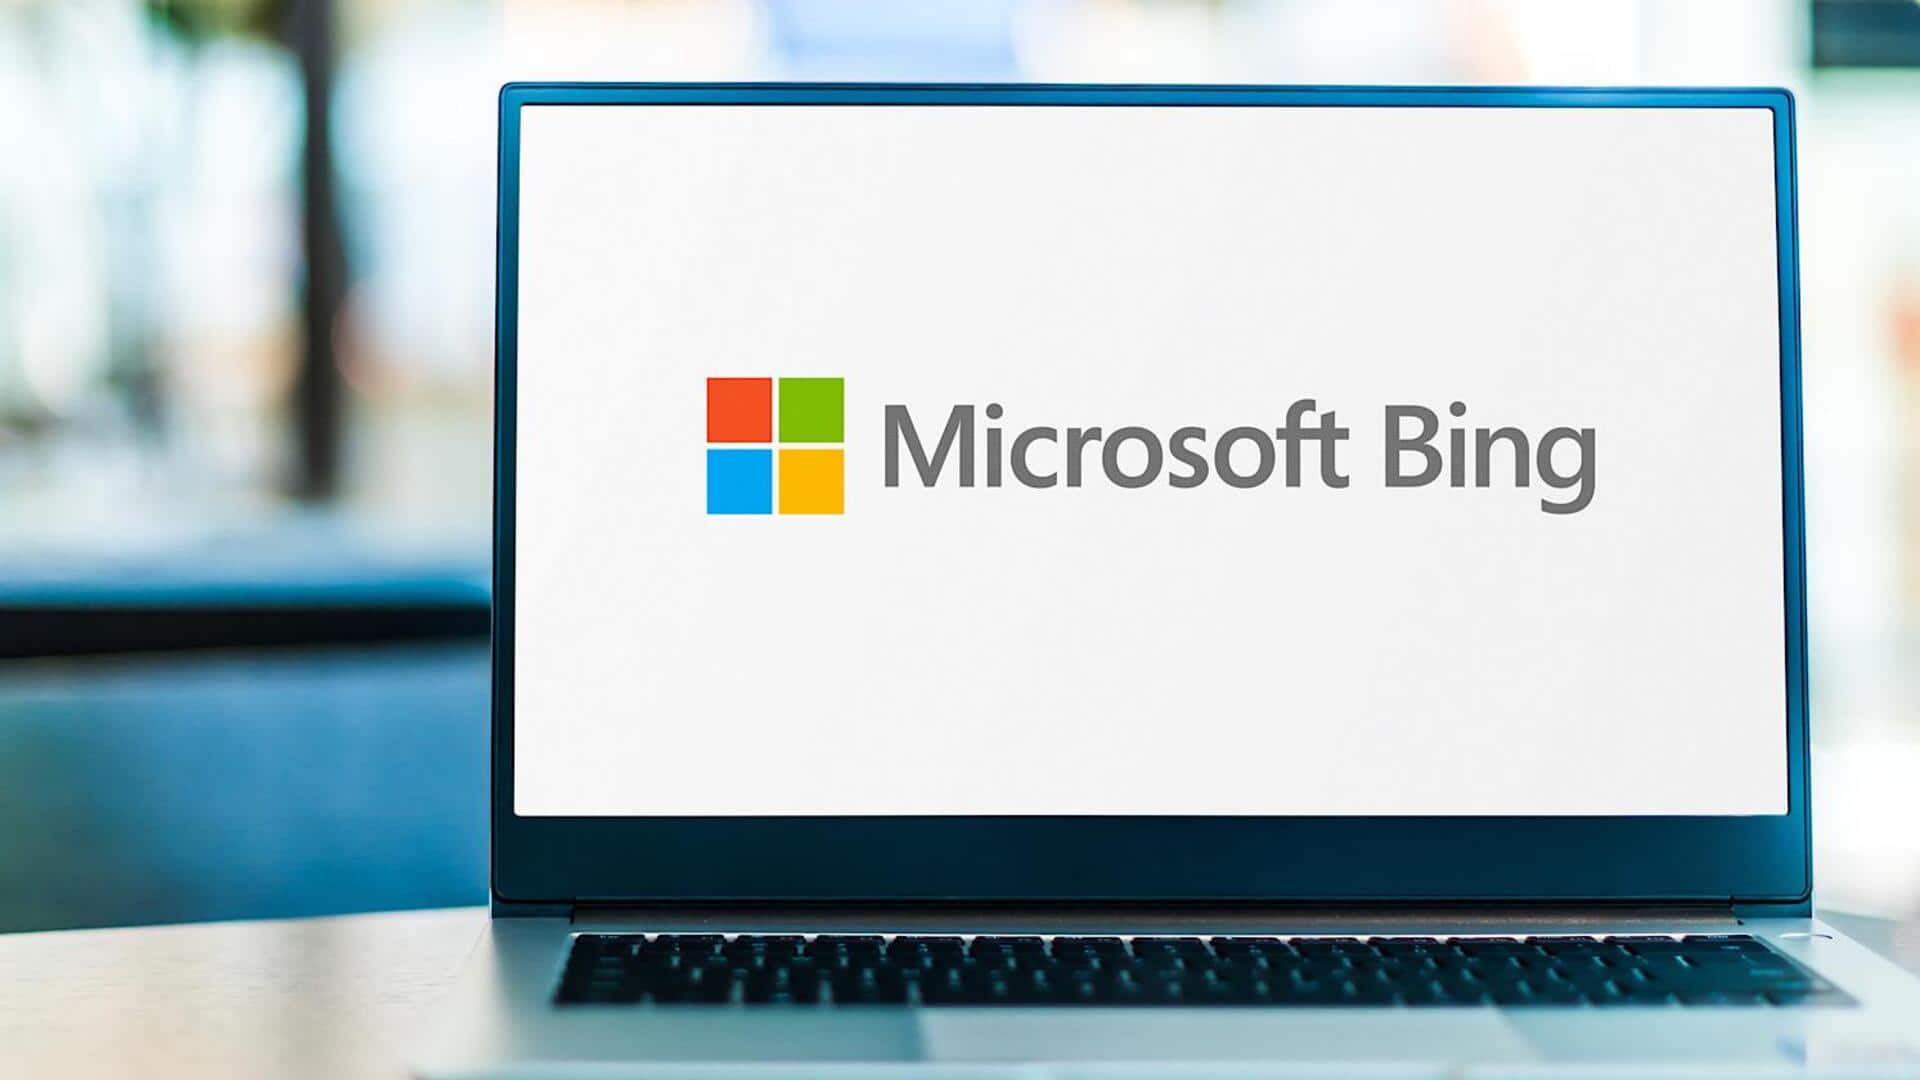 Microsoft utilizing Windows pop-ups to persuade Chrome users toward Bing